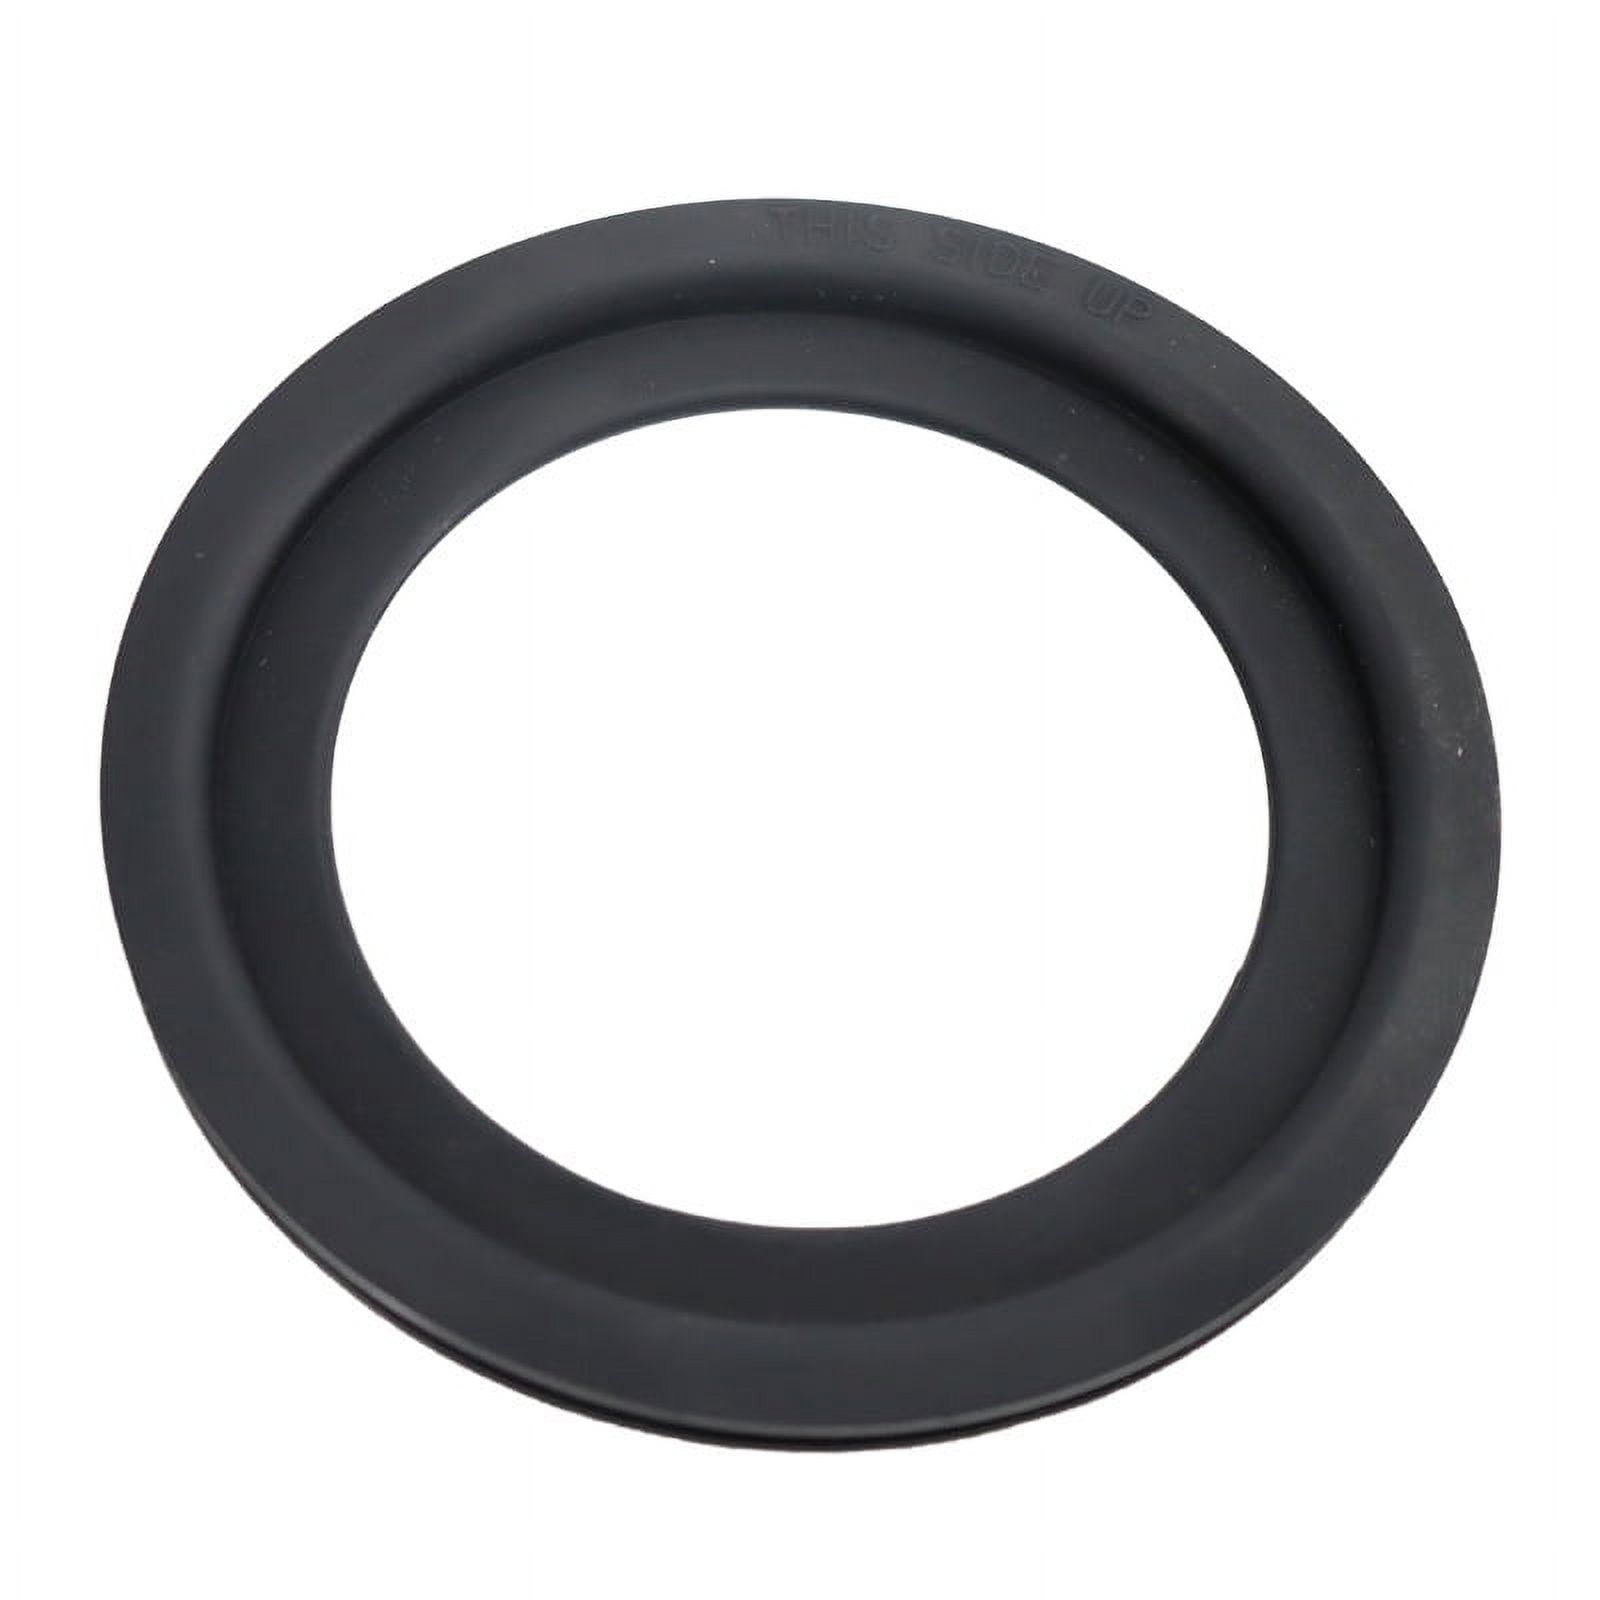 RV Toilet Seal Wax Ring - RecPro